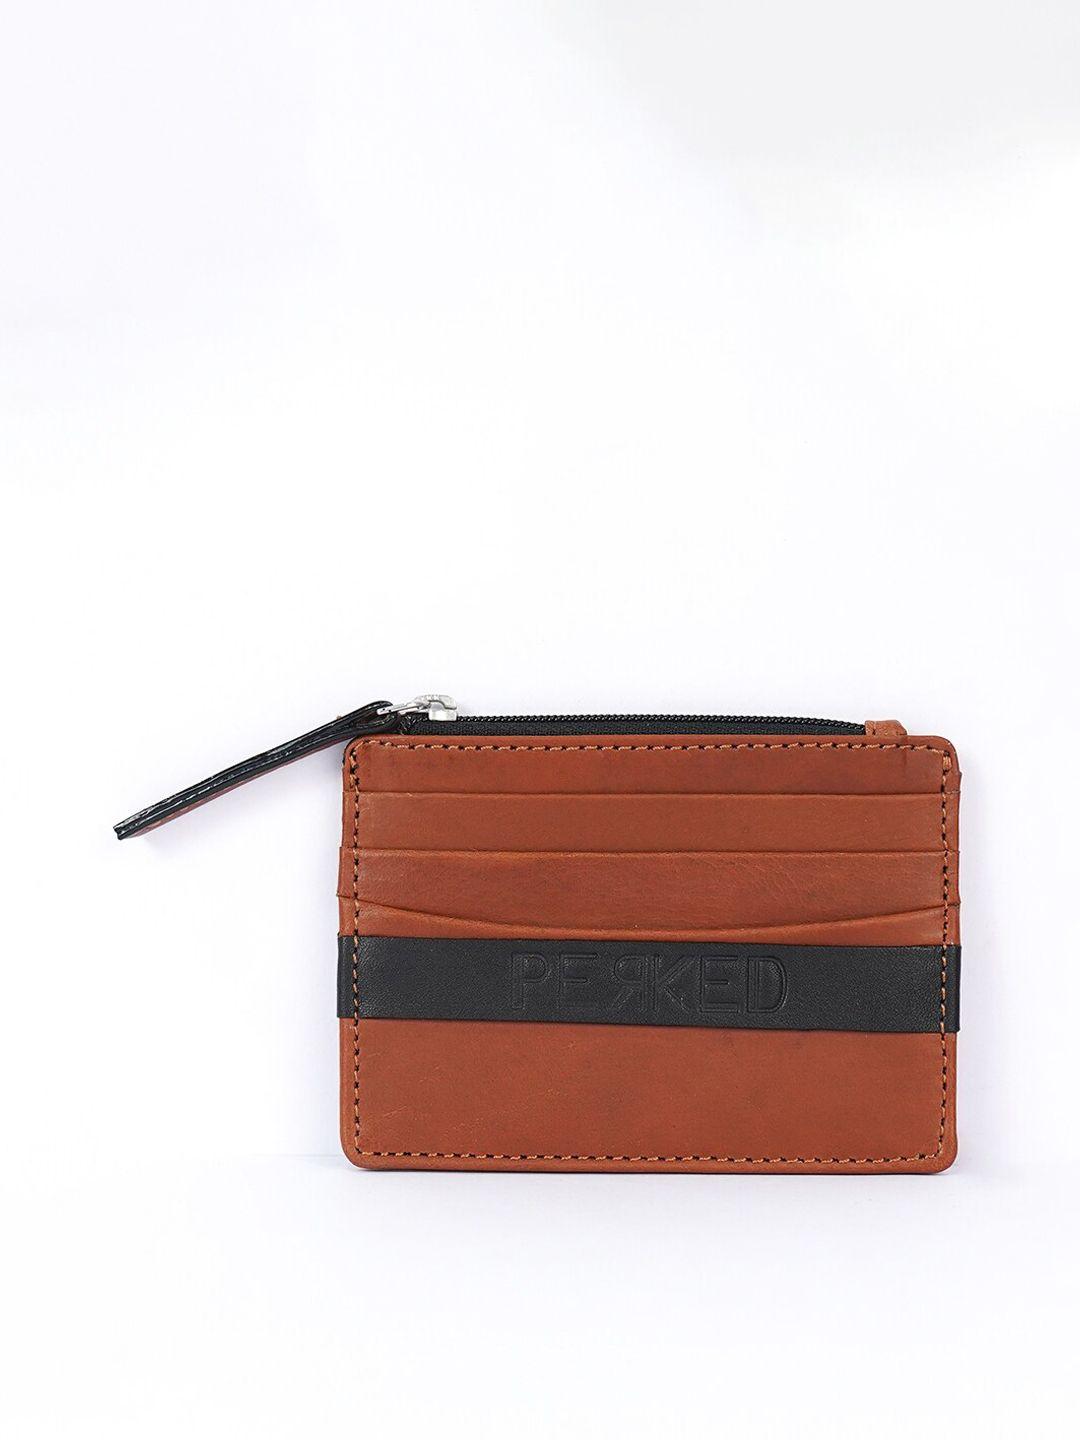 perked unisex brown & black leather card holder